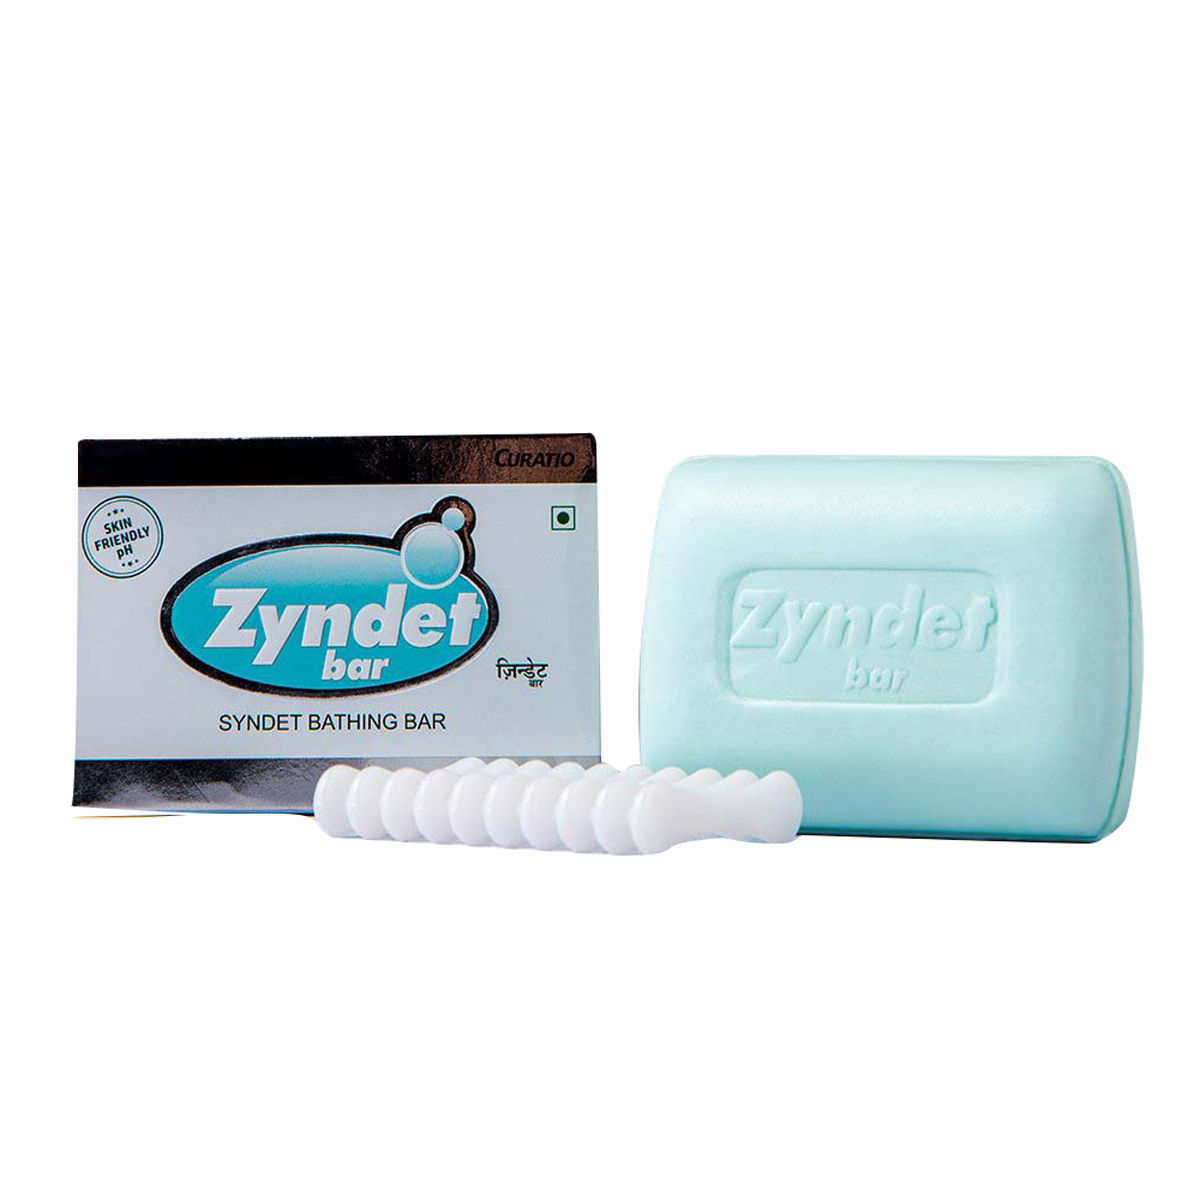 Zyndet Bar, 100 gm, Pack of 1 